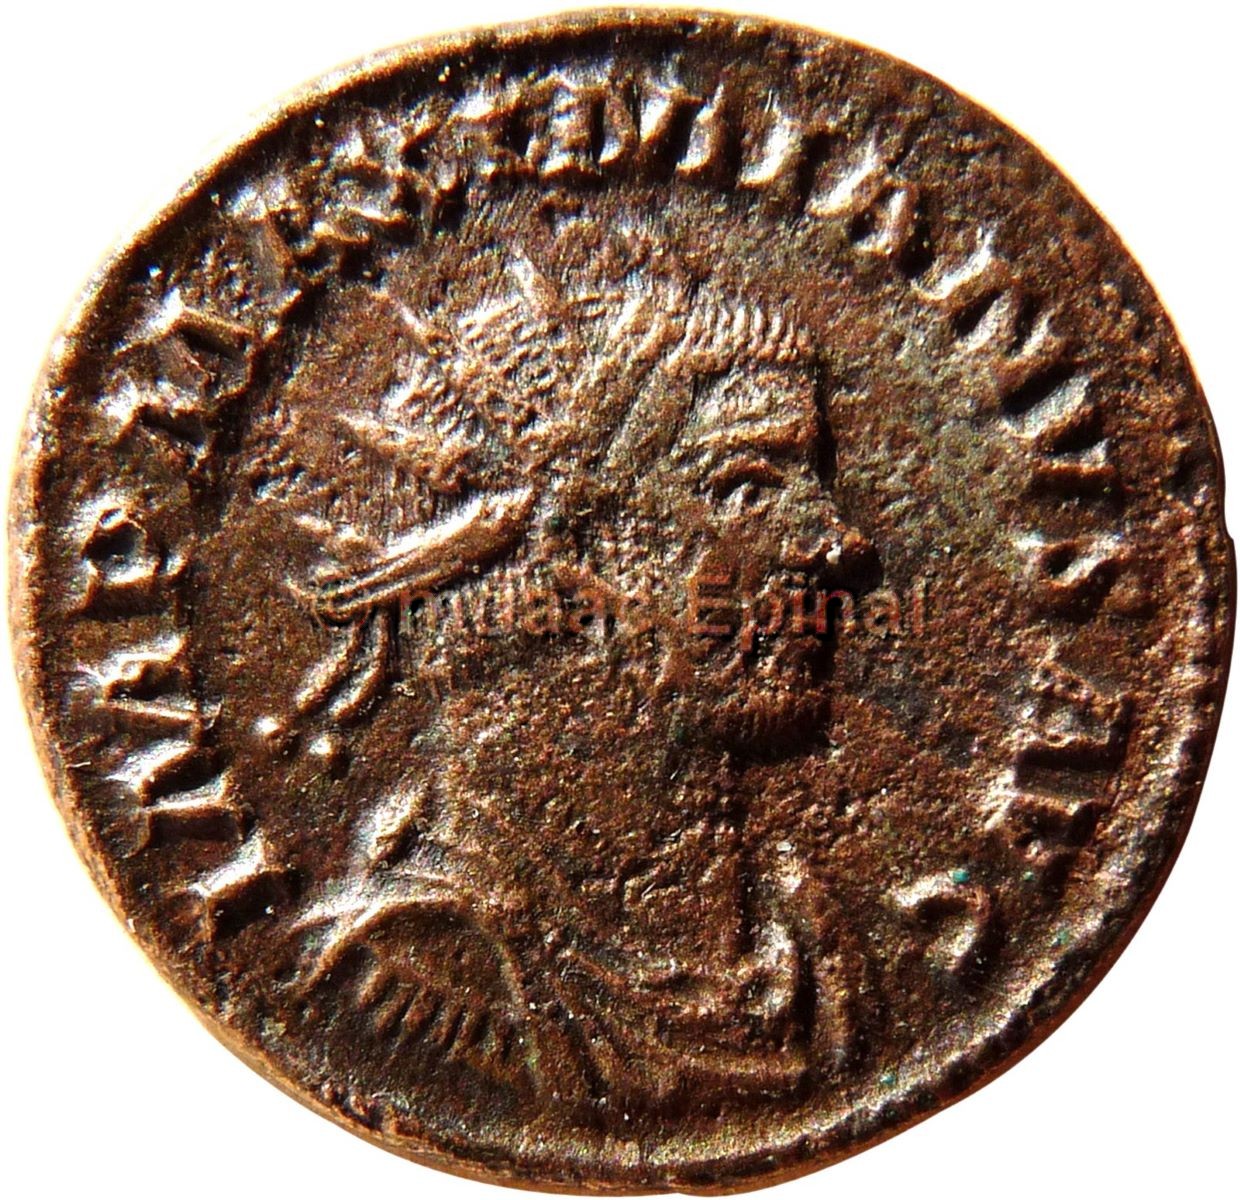 pièce de monnaie ; antoninianus